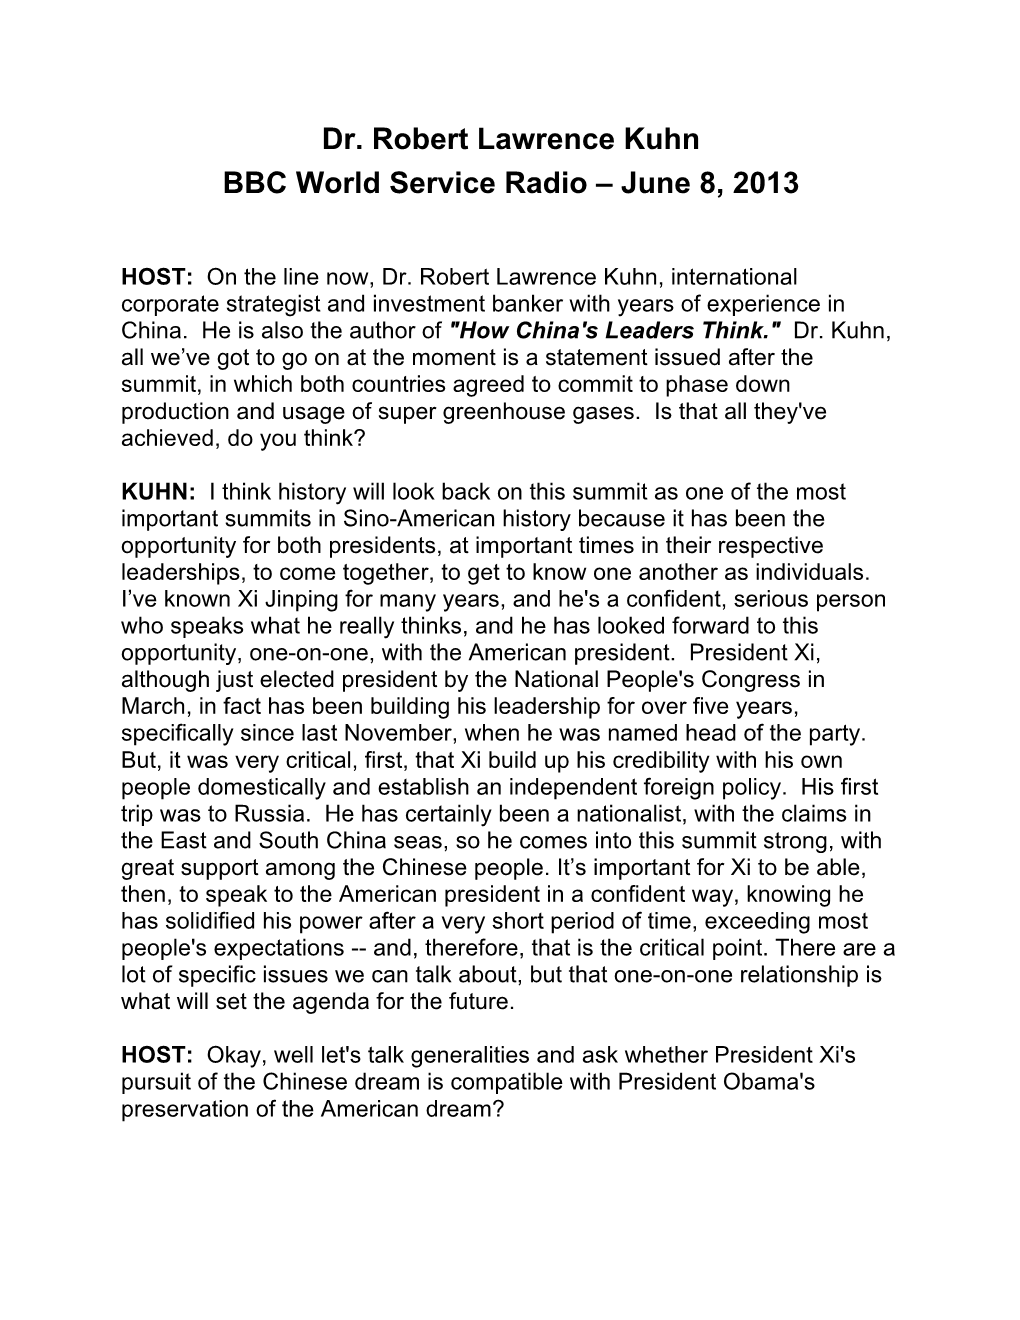 Dr. Robert Lawrence Kuhn BBC World Service Radio – June